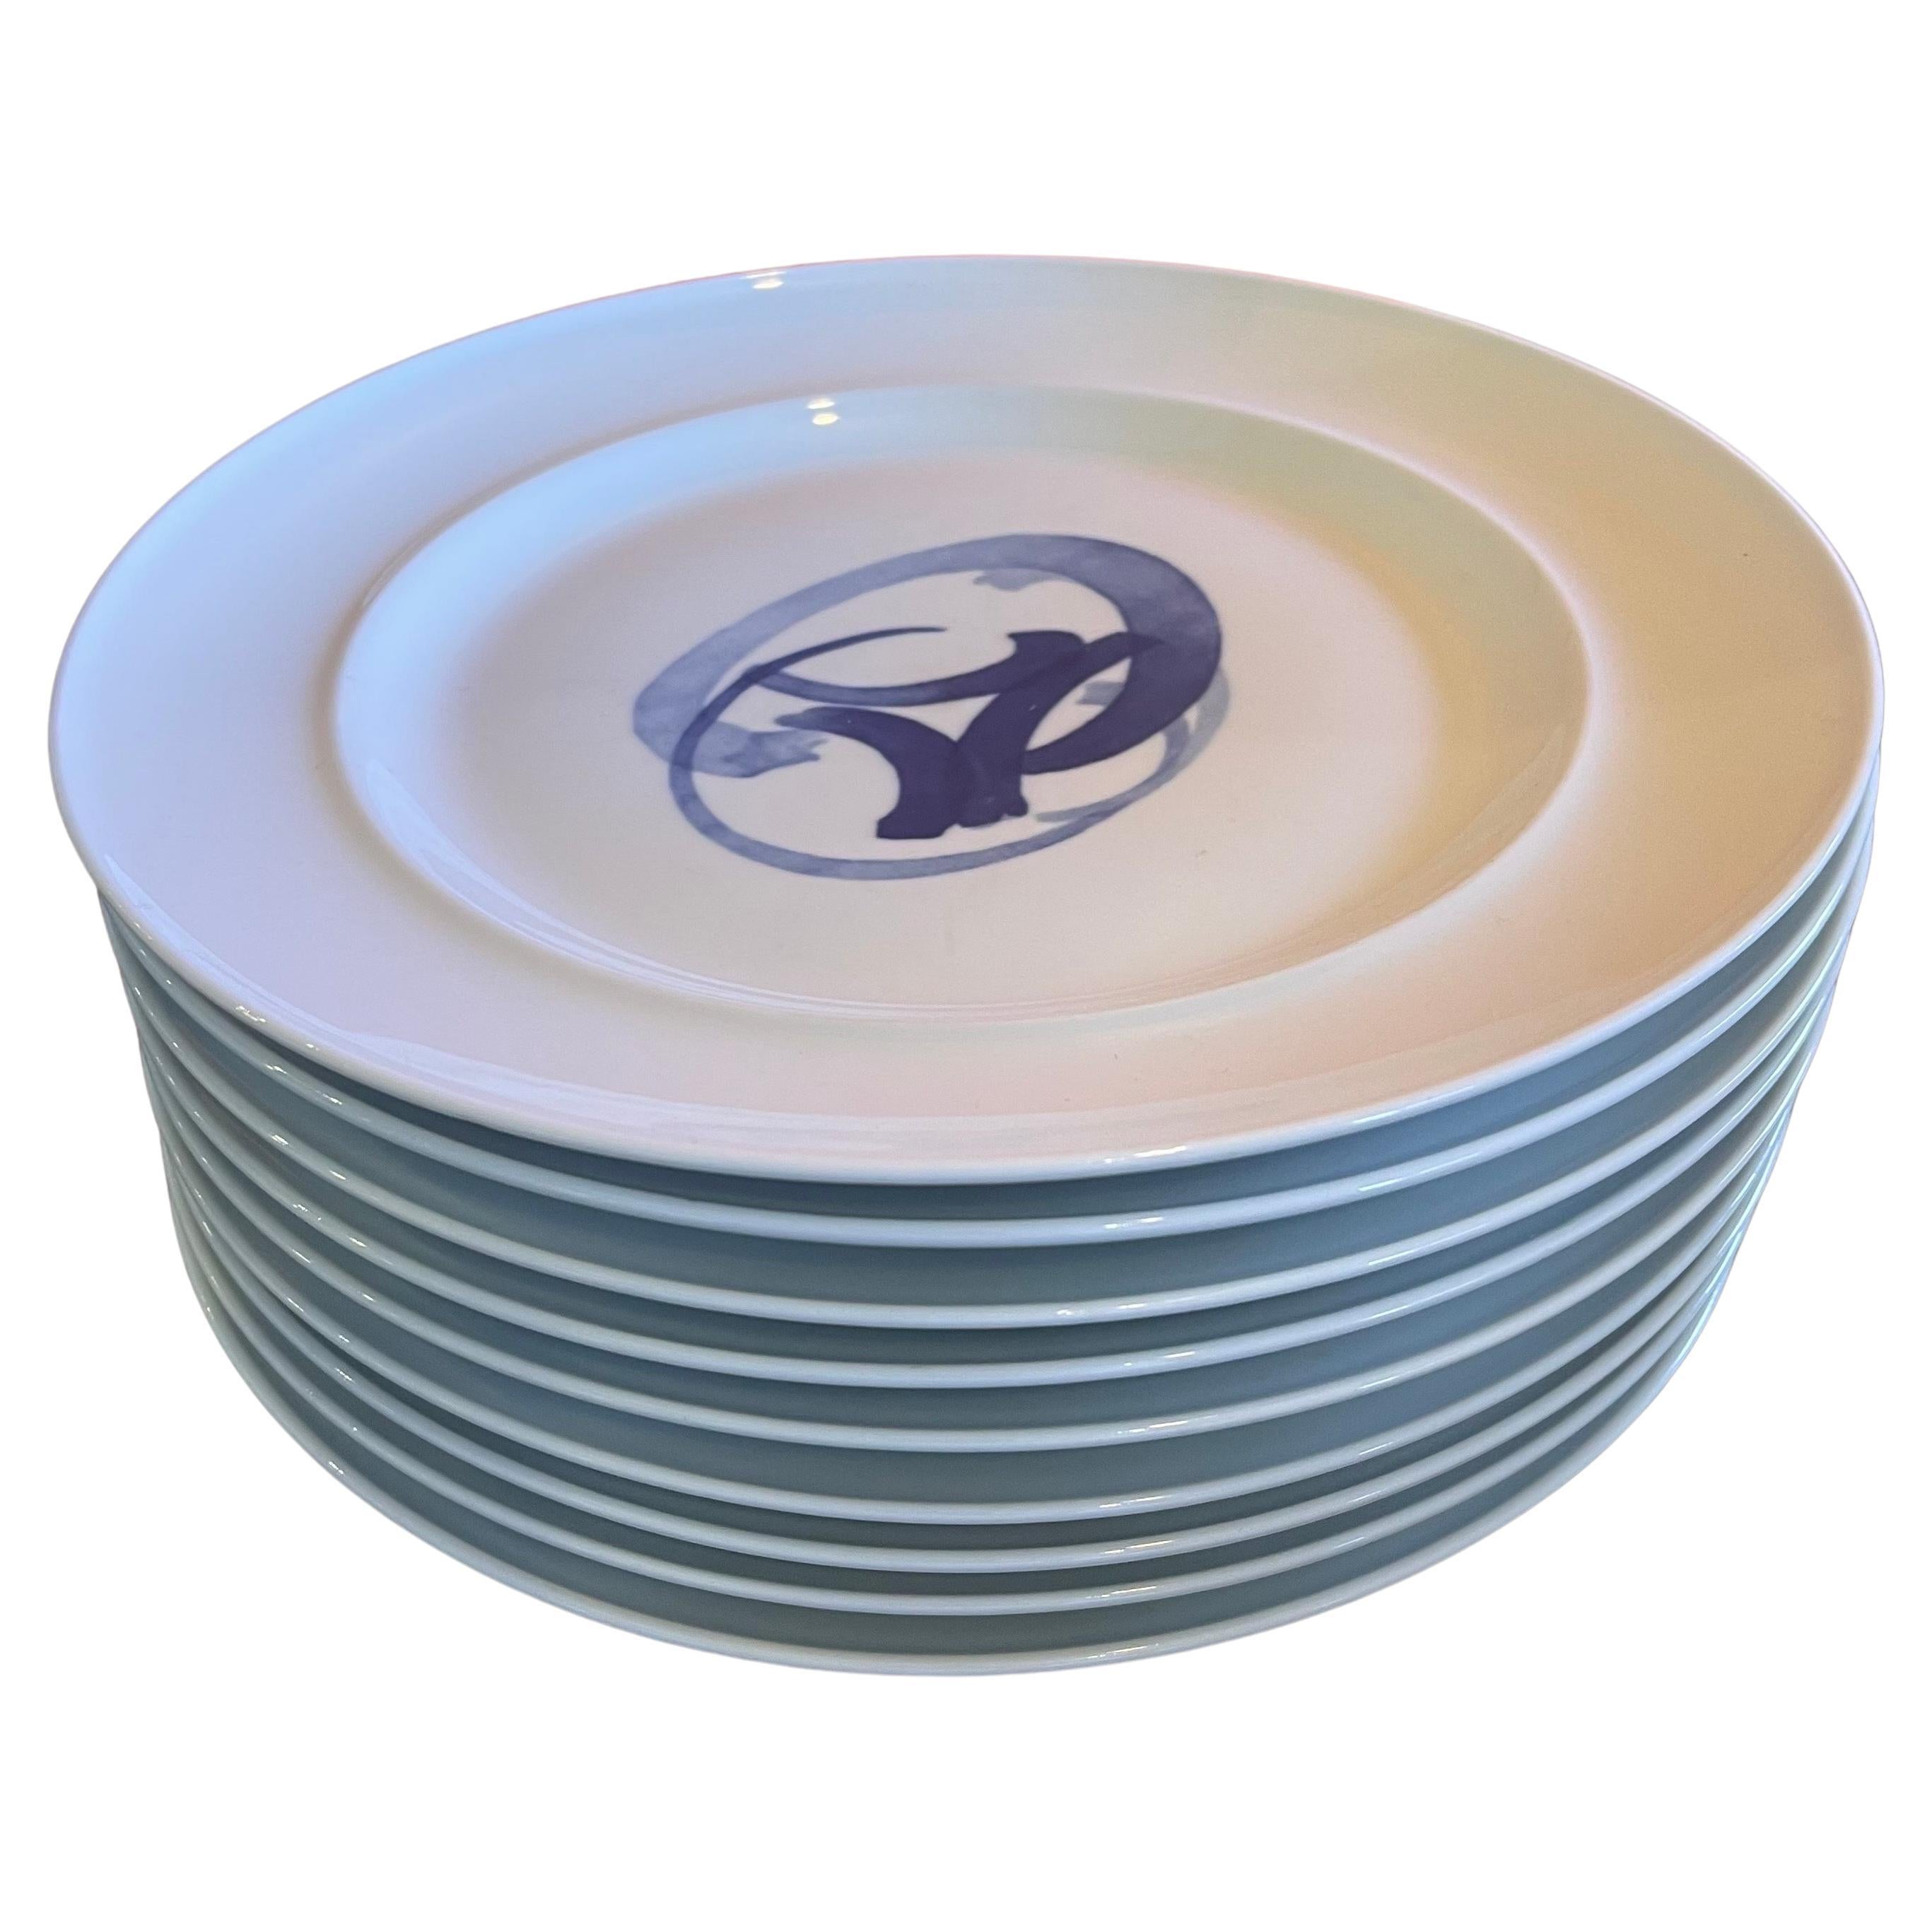 Set of Nine Blue Koppel Porcelain Dinner Plates by Bing & Grondahl For Sale 2